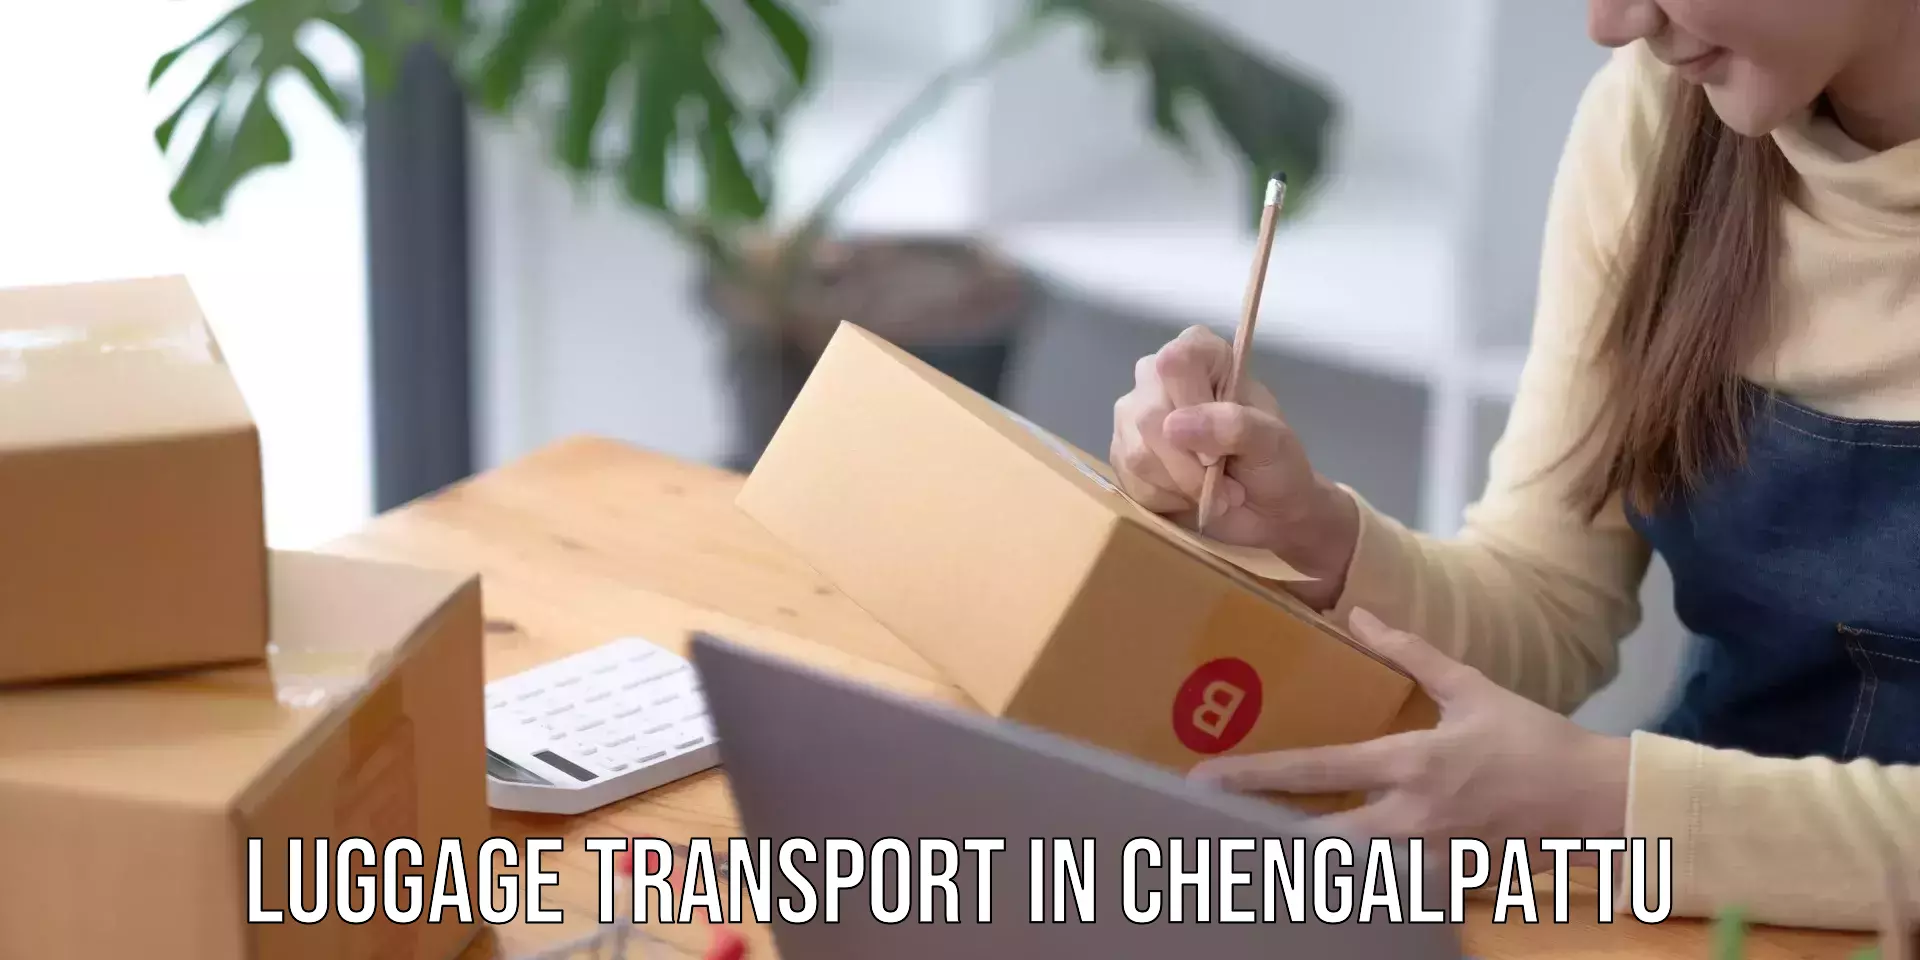 High-quality baggage shipment in Chengalpattu